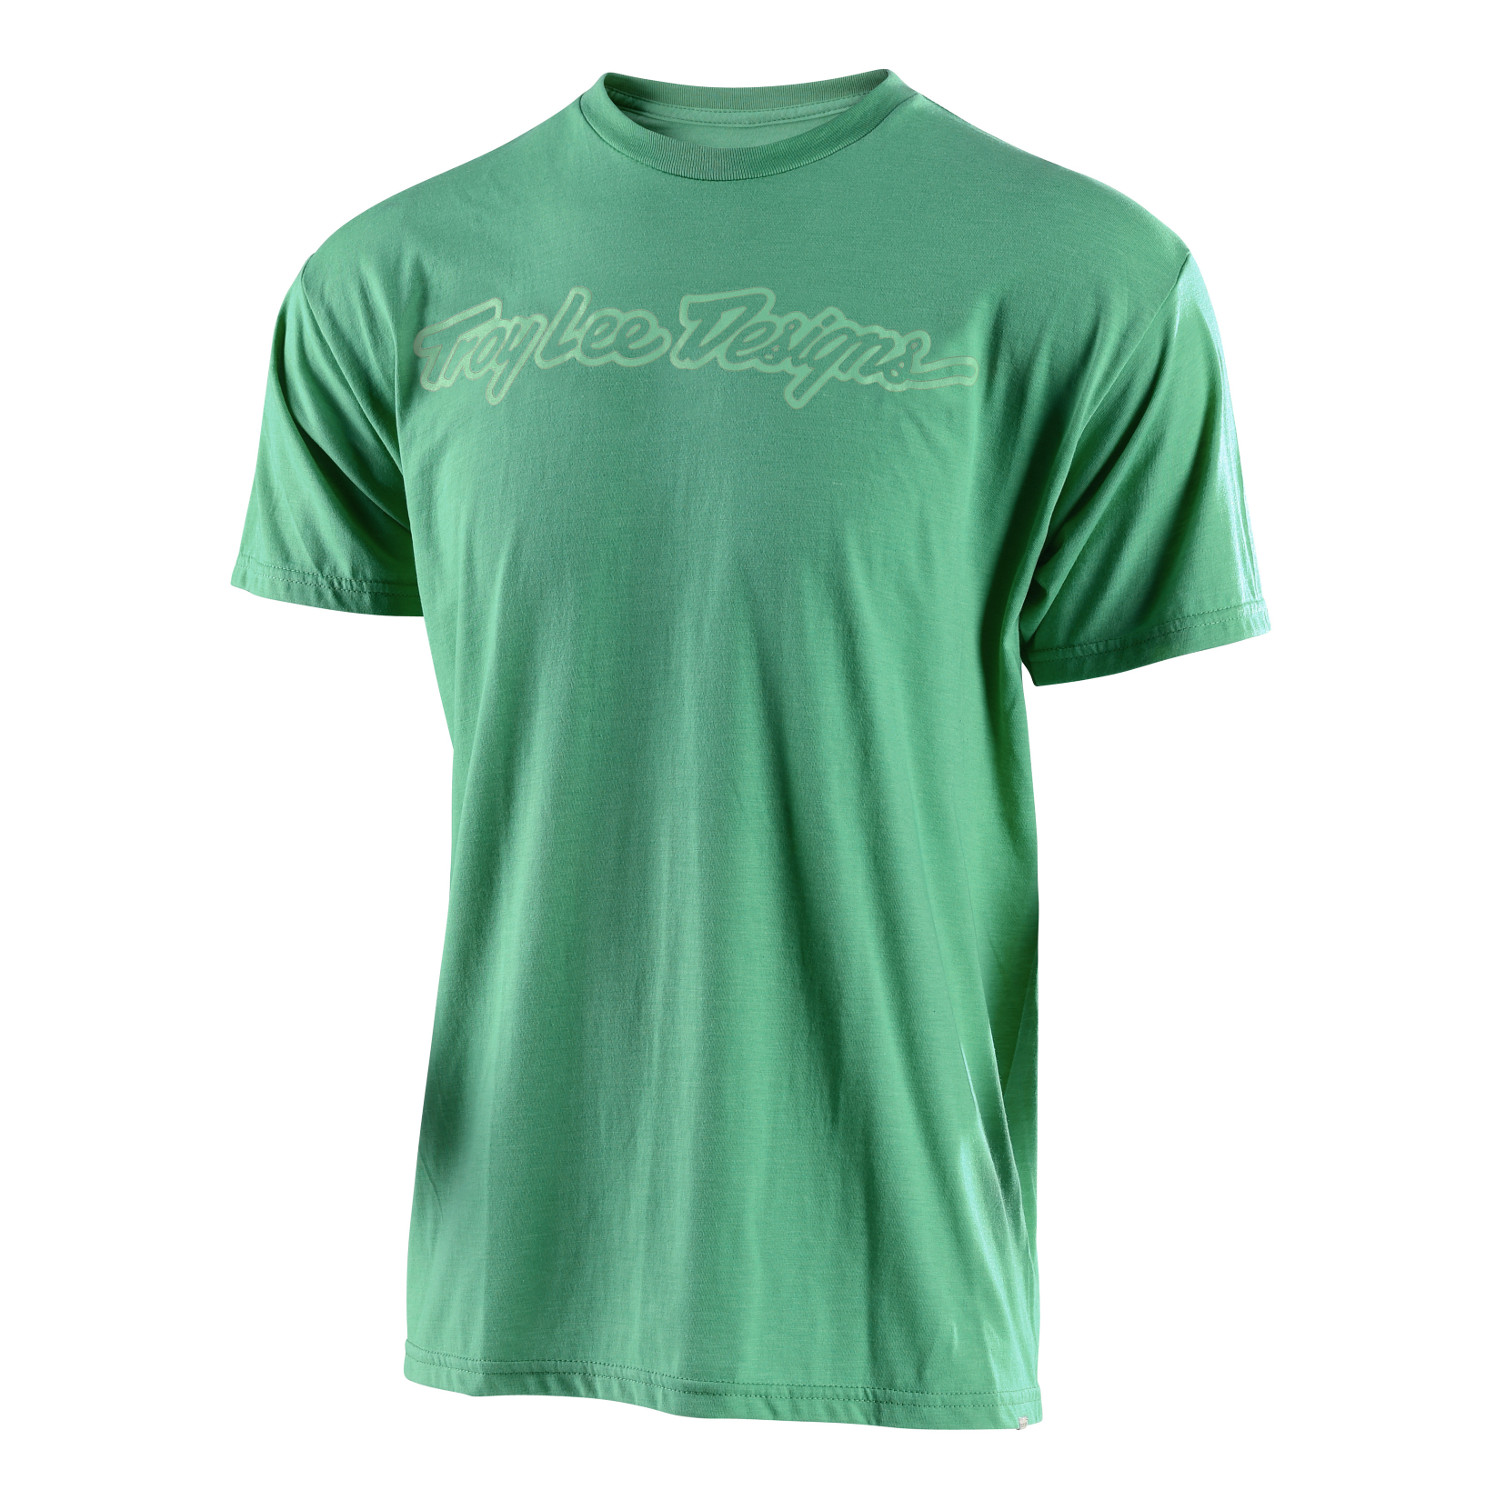 Troy Lee Designs T-Shirt Signature Grün meliert/Mint